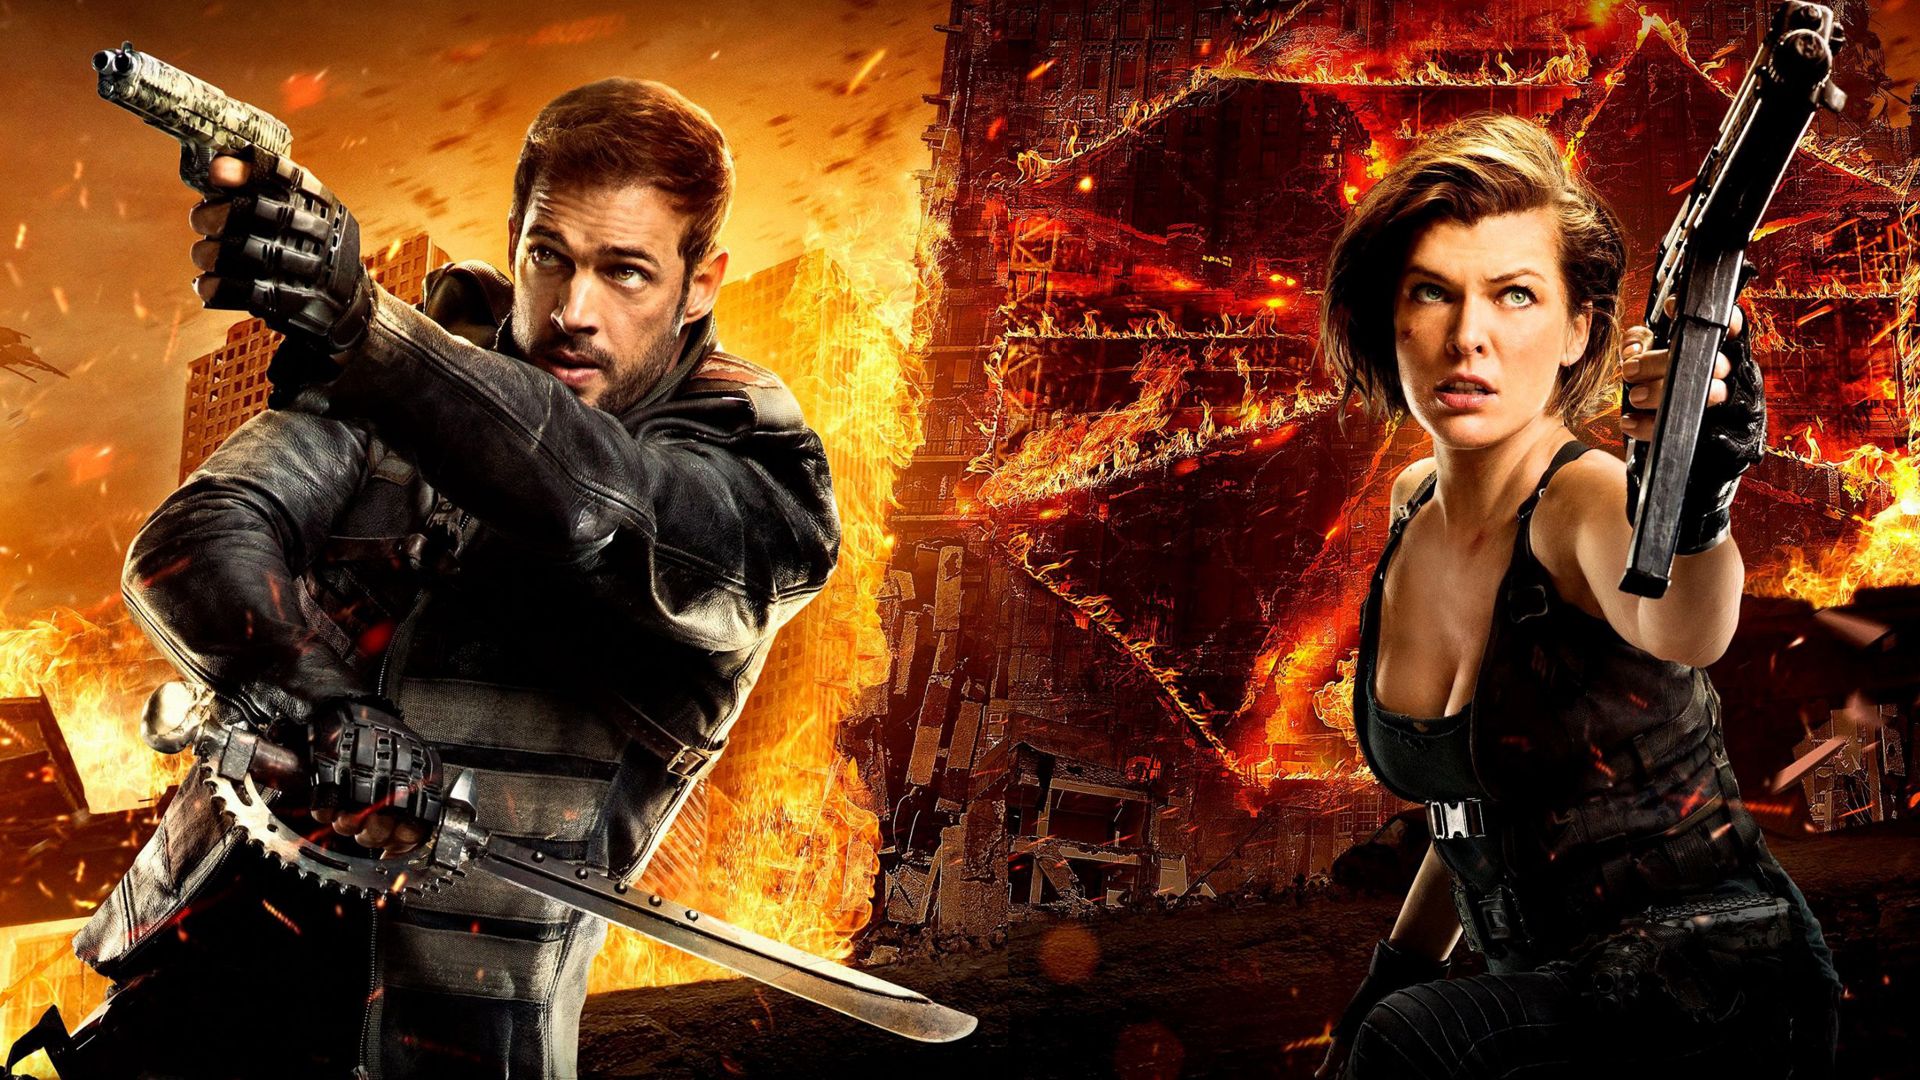 Desktop Wallpaper 2016 Action Movie, Resident Evil: The Final Chapter New  Poster, Hd Image, Picture, Background, Jo3blj